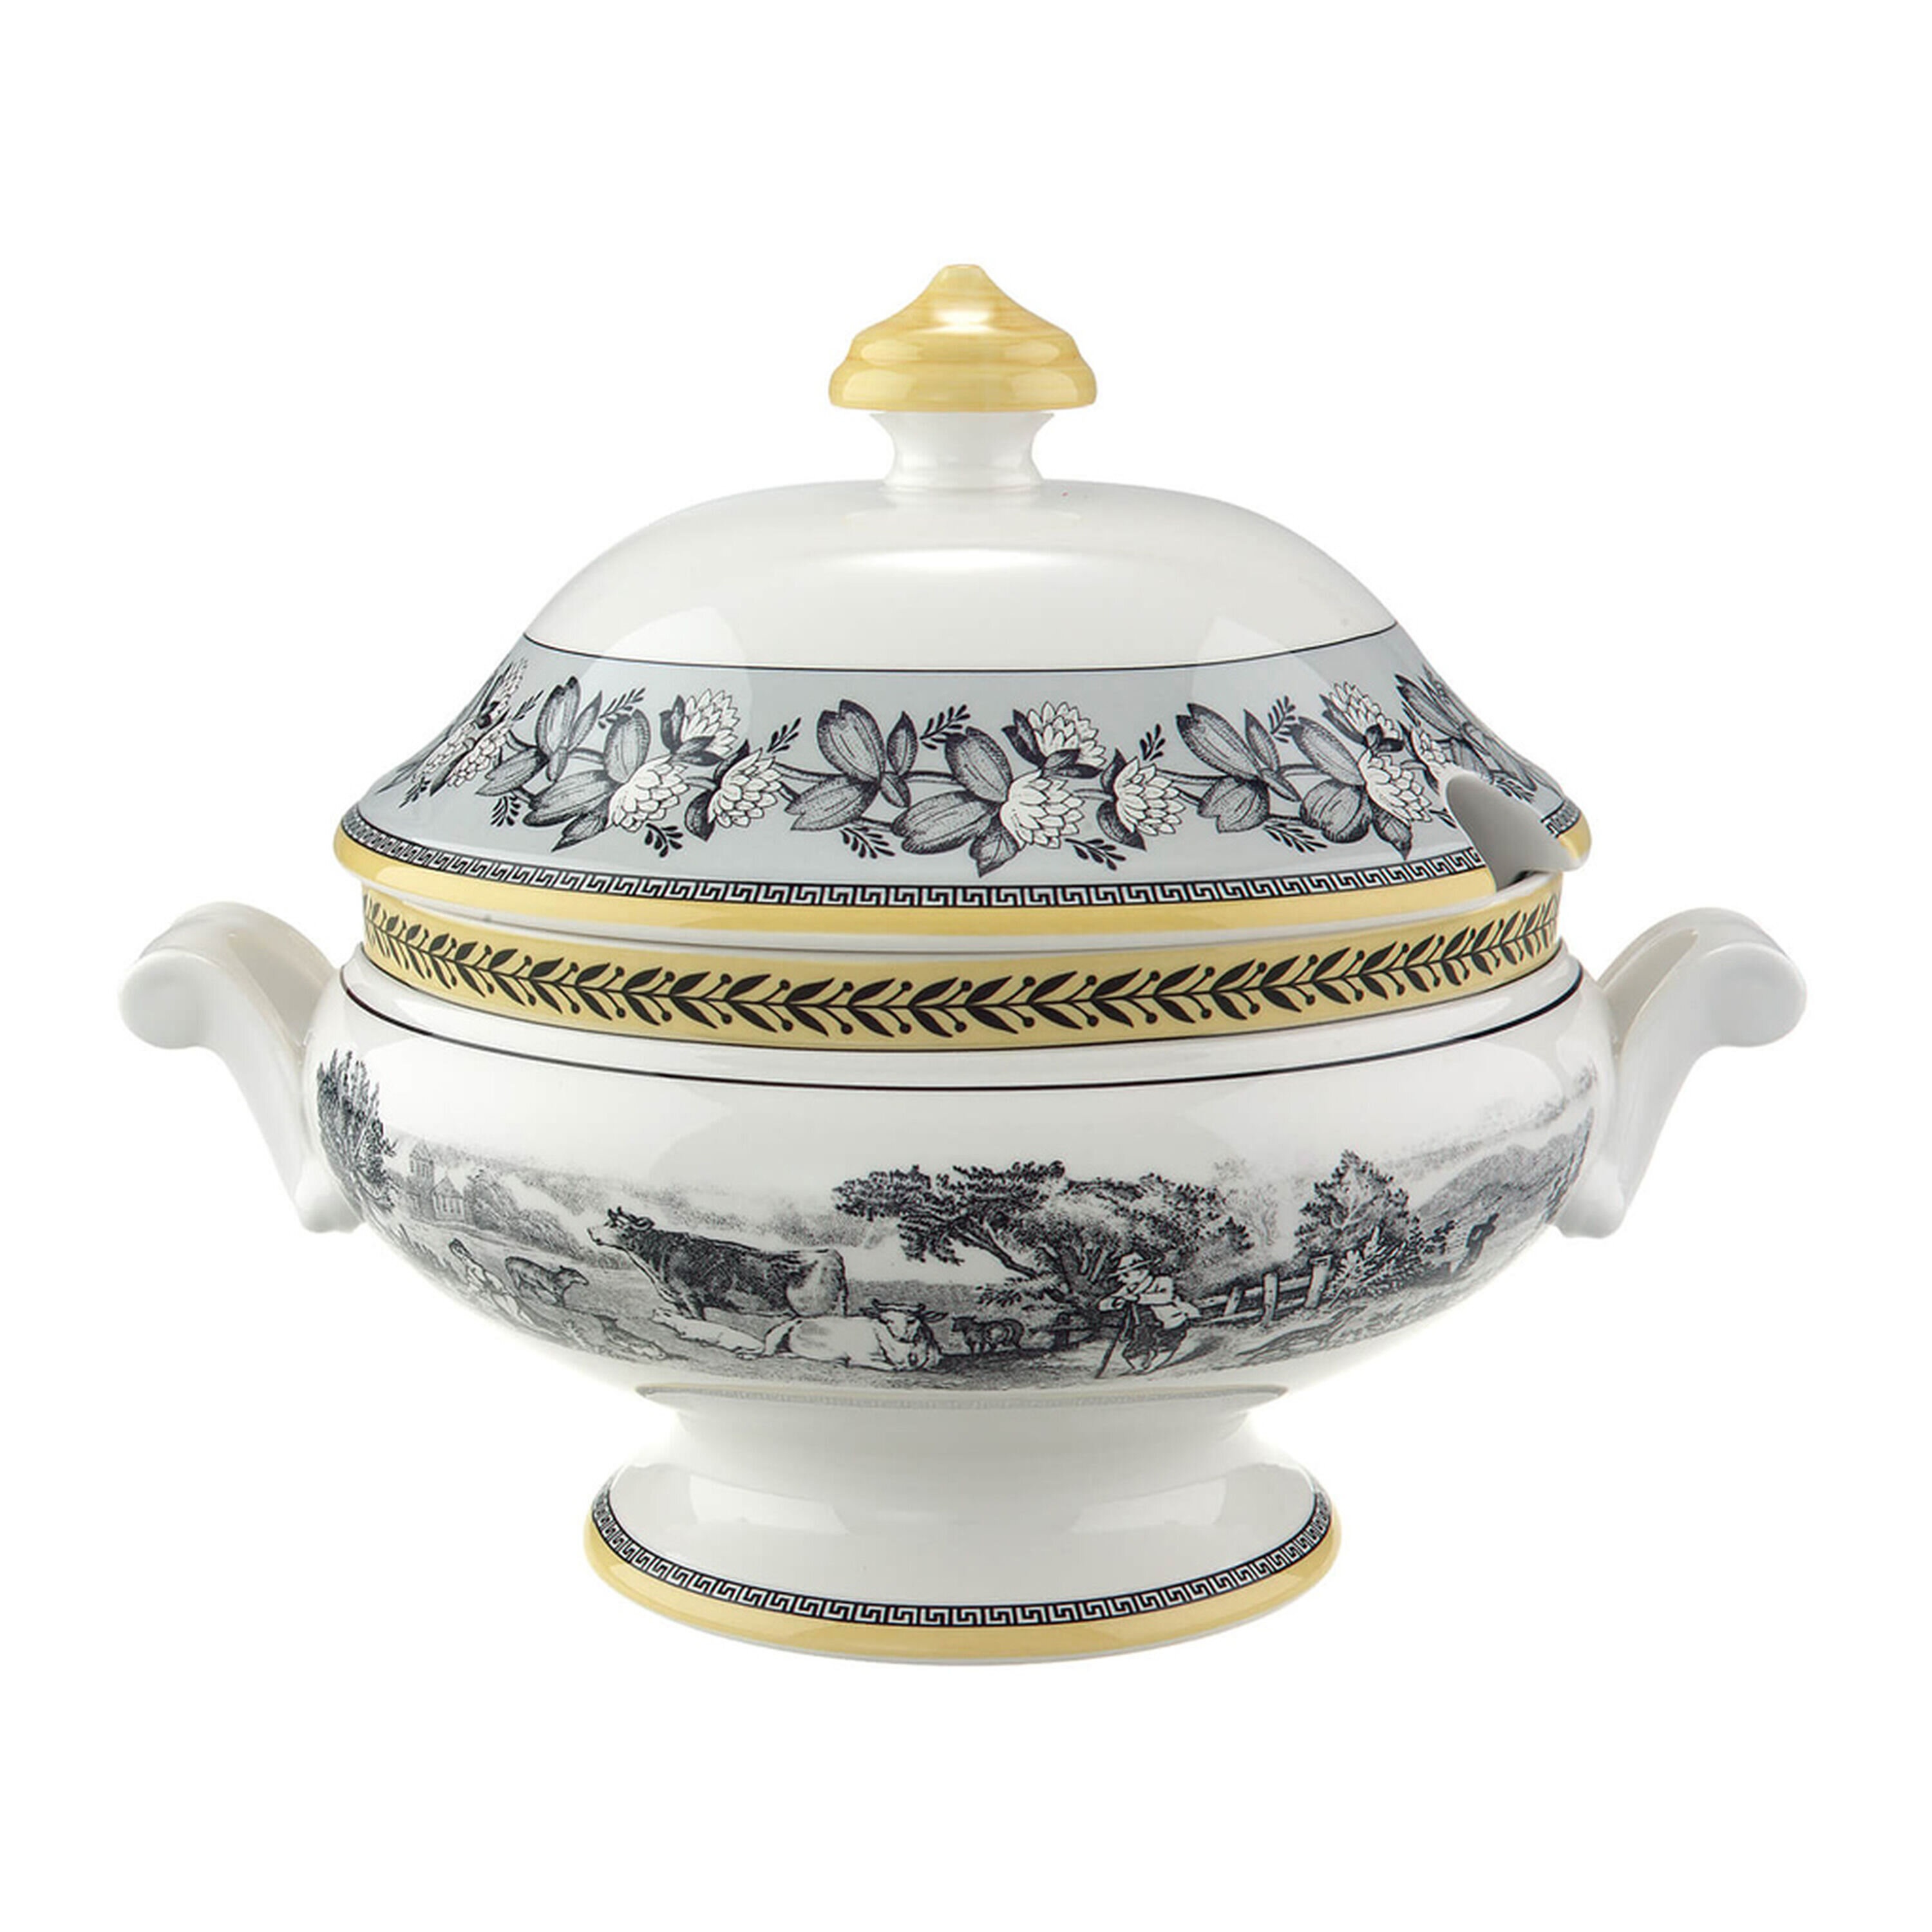 https://visualhunt.com/photos/23/villeroy-boch-audun-porcelain-china-vegetable-bowl.jpg